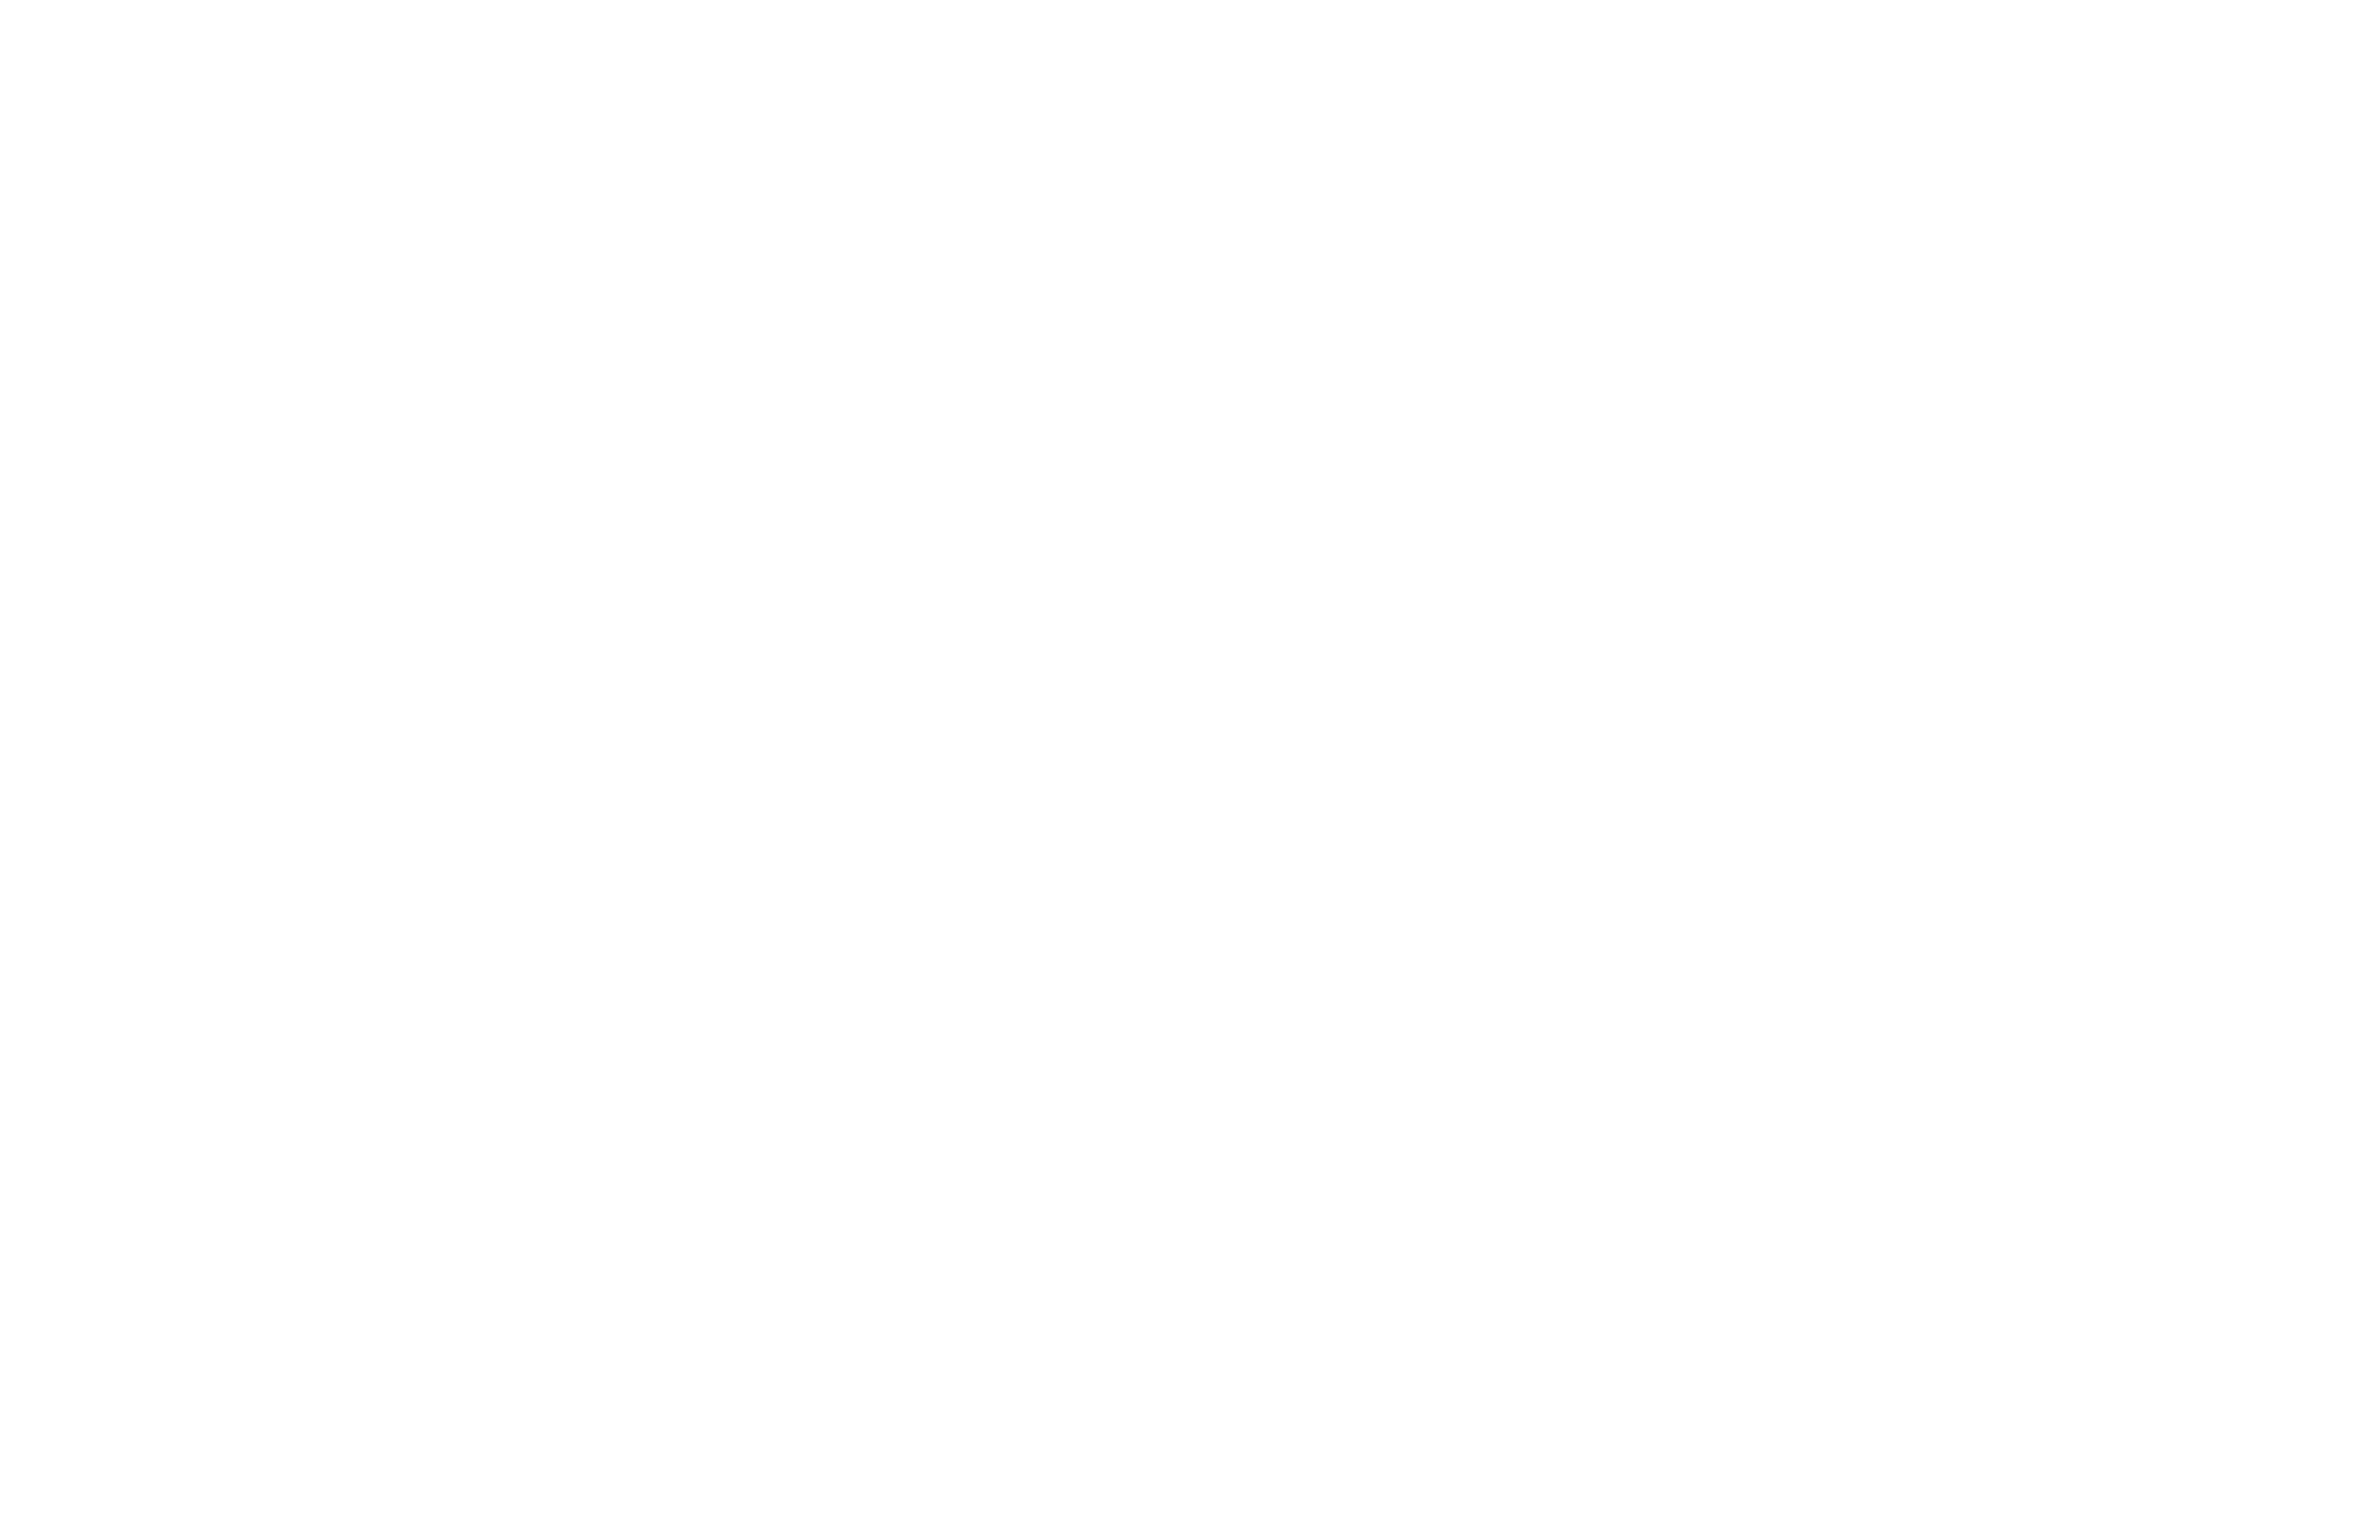 Big Chicken_LG_WHT_RGB_TM-01.png